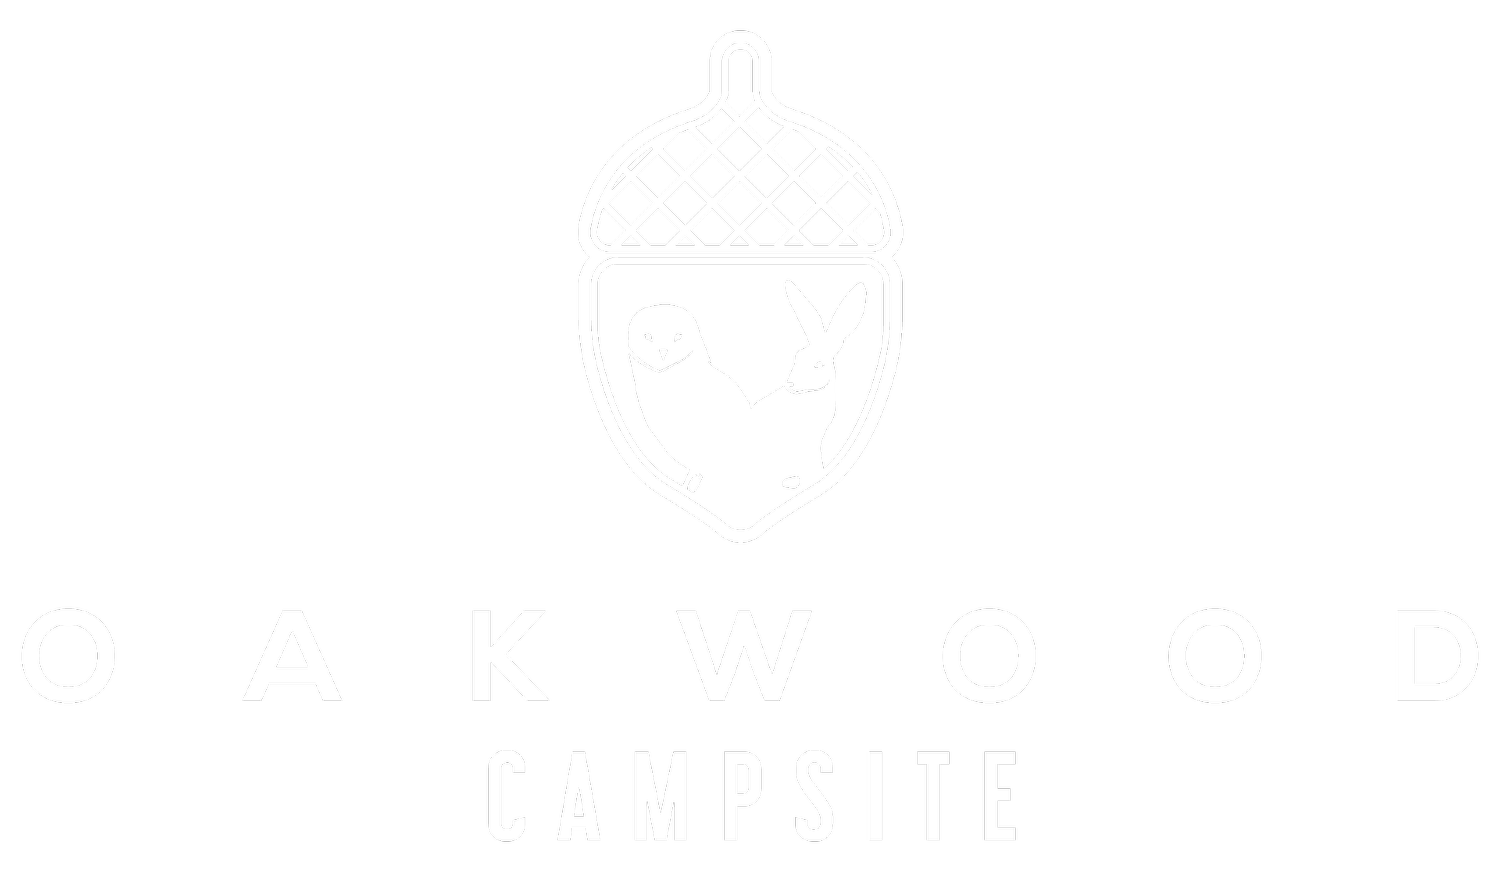 Oakwood Campsite